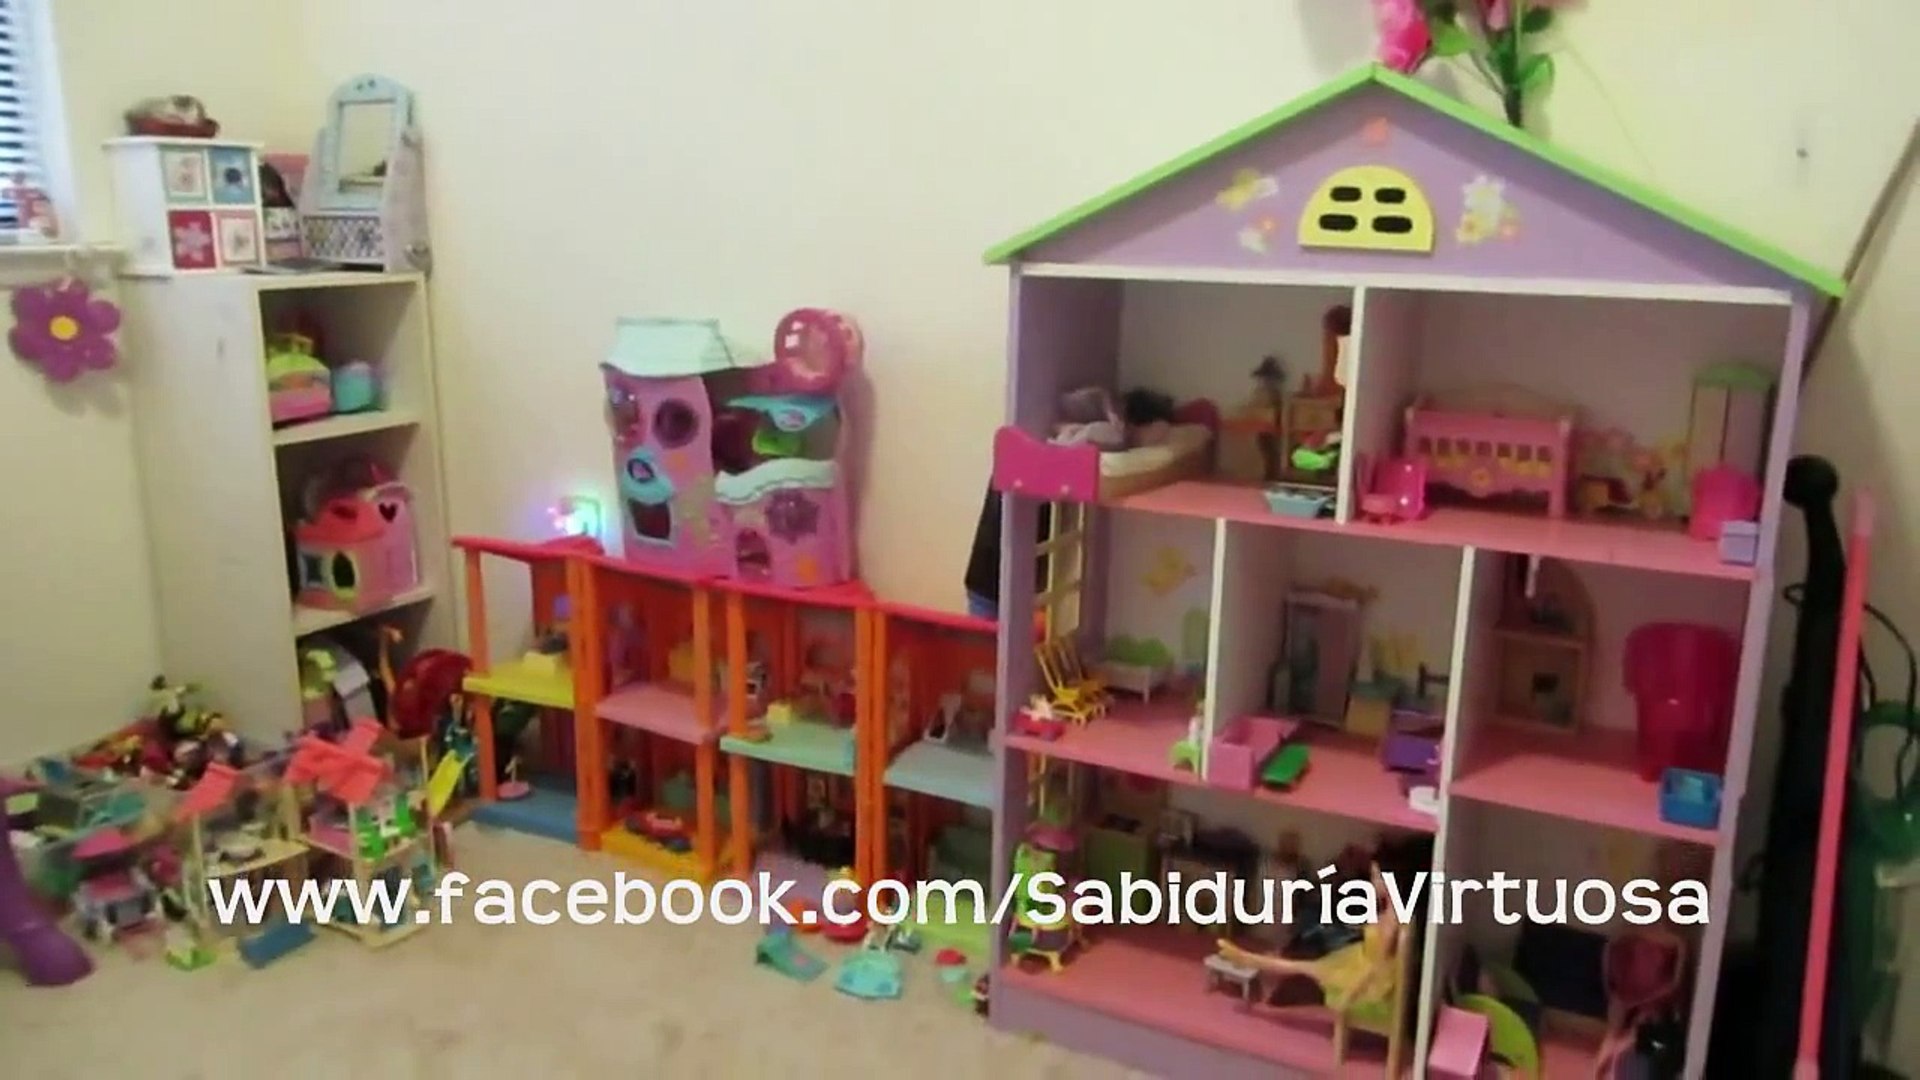 Tour: Casa de Muñecas Barbie / Barbies doll house tour - Dailymotion Video